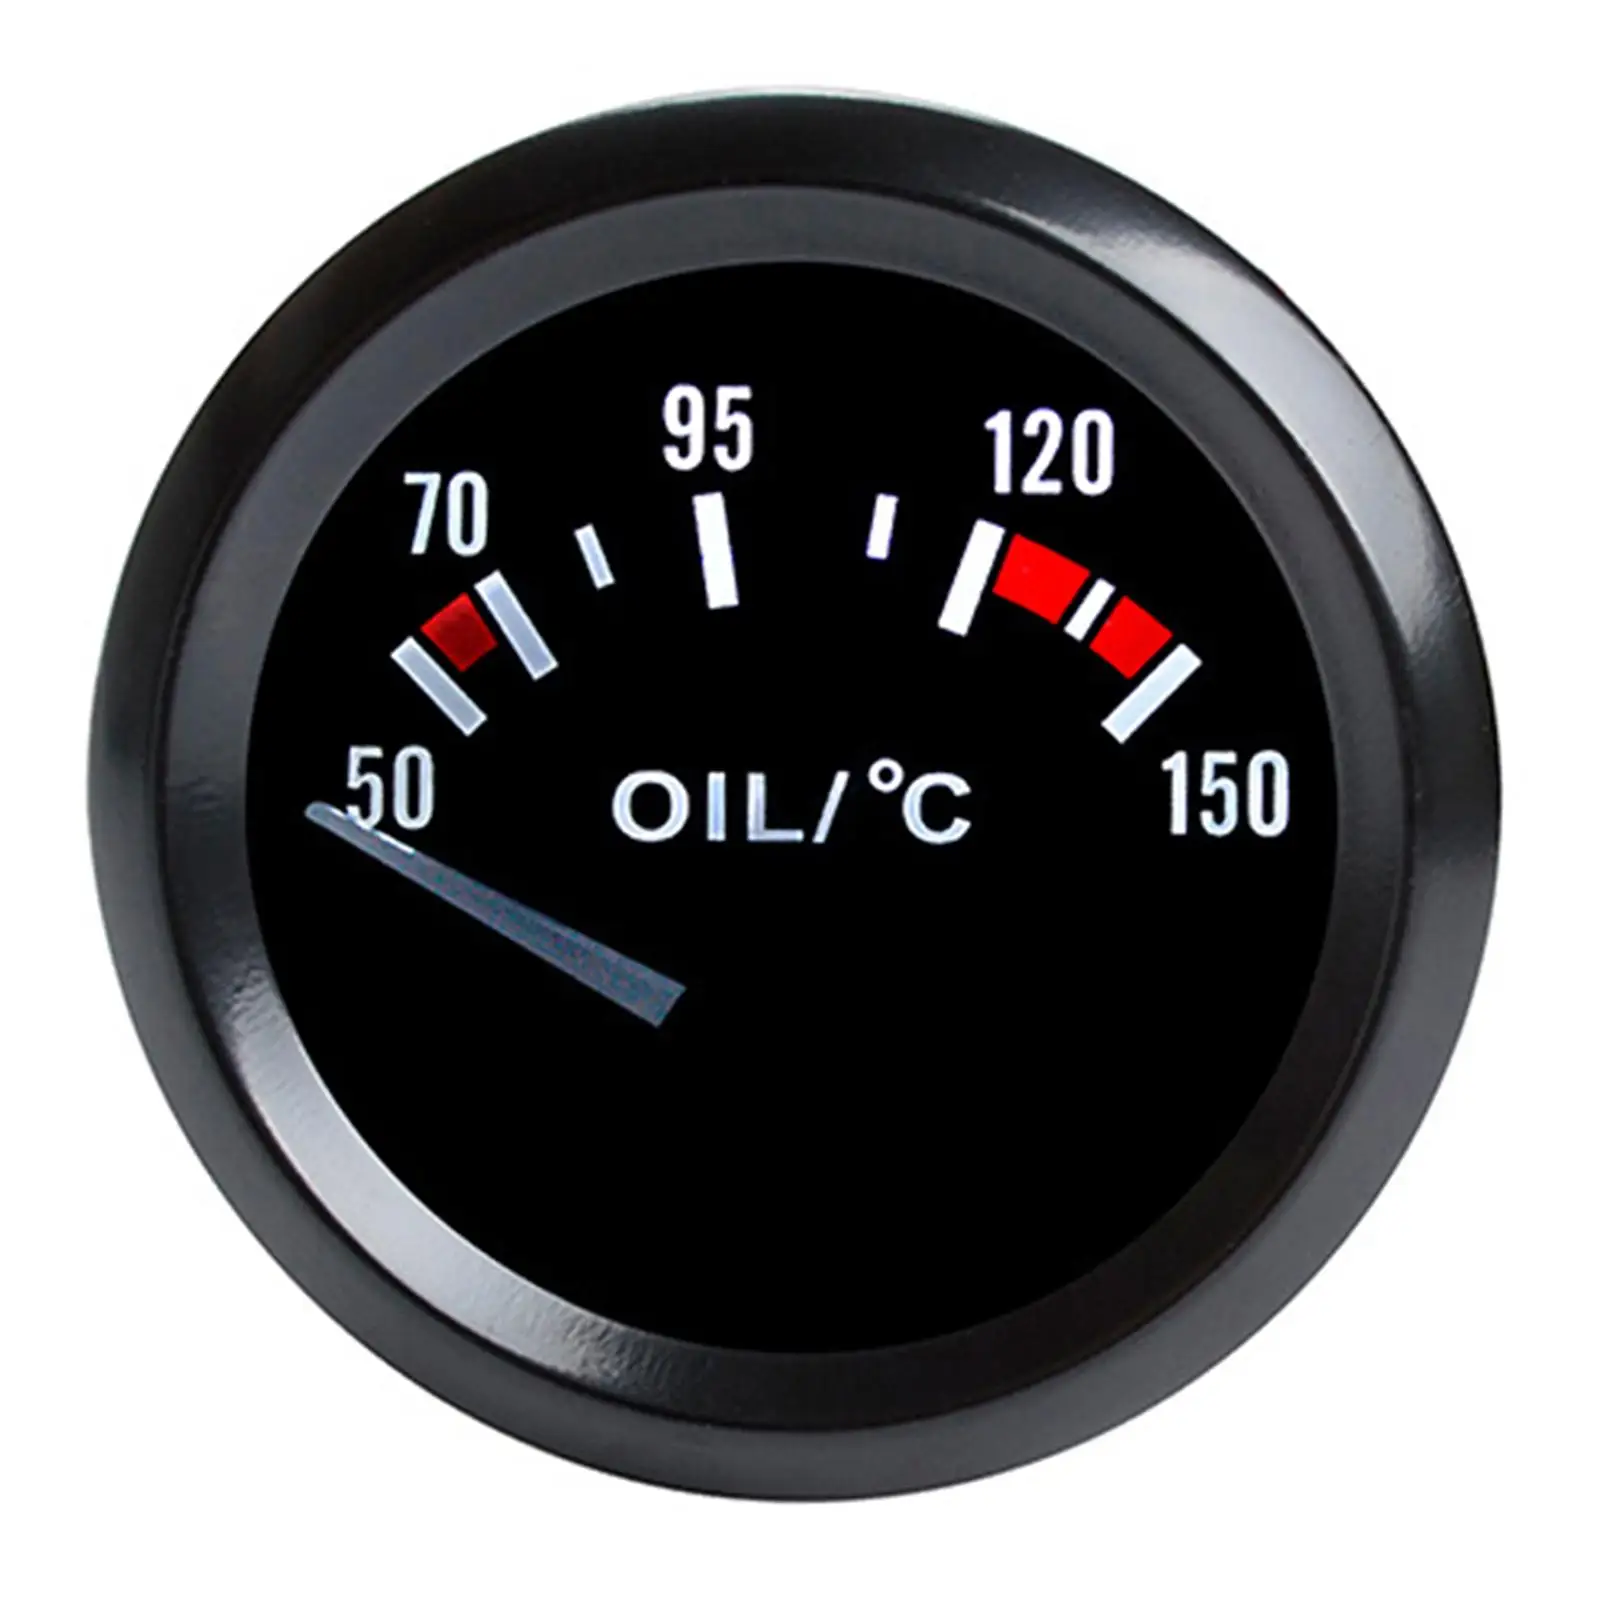 Oil Temp Gauge 12V Premium Oil Temperature Gauge for Truck Vehicle Car